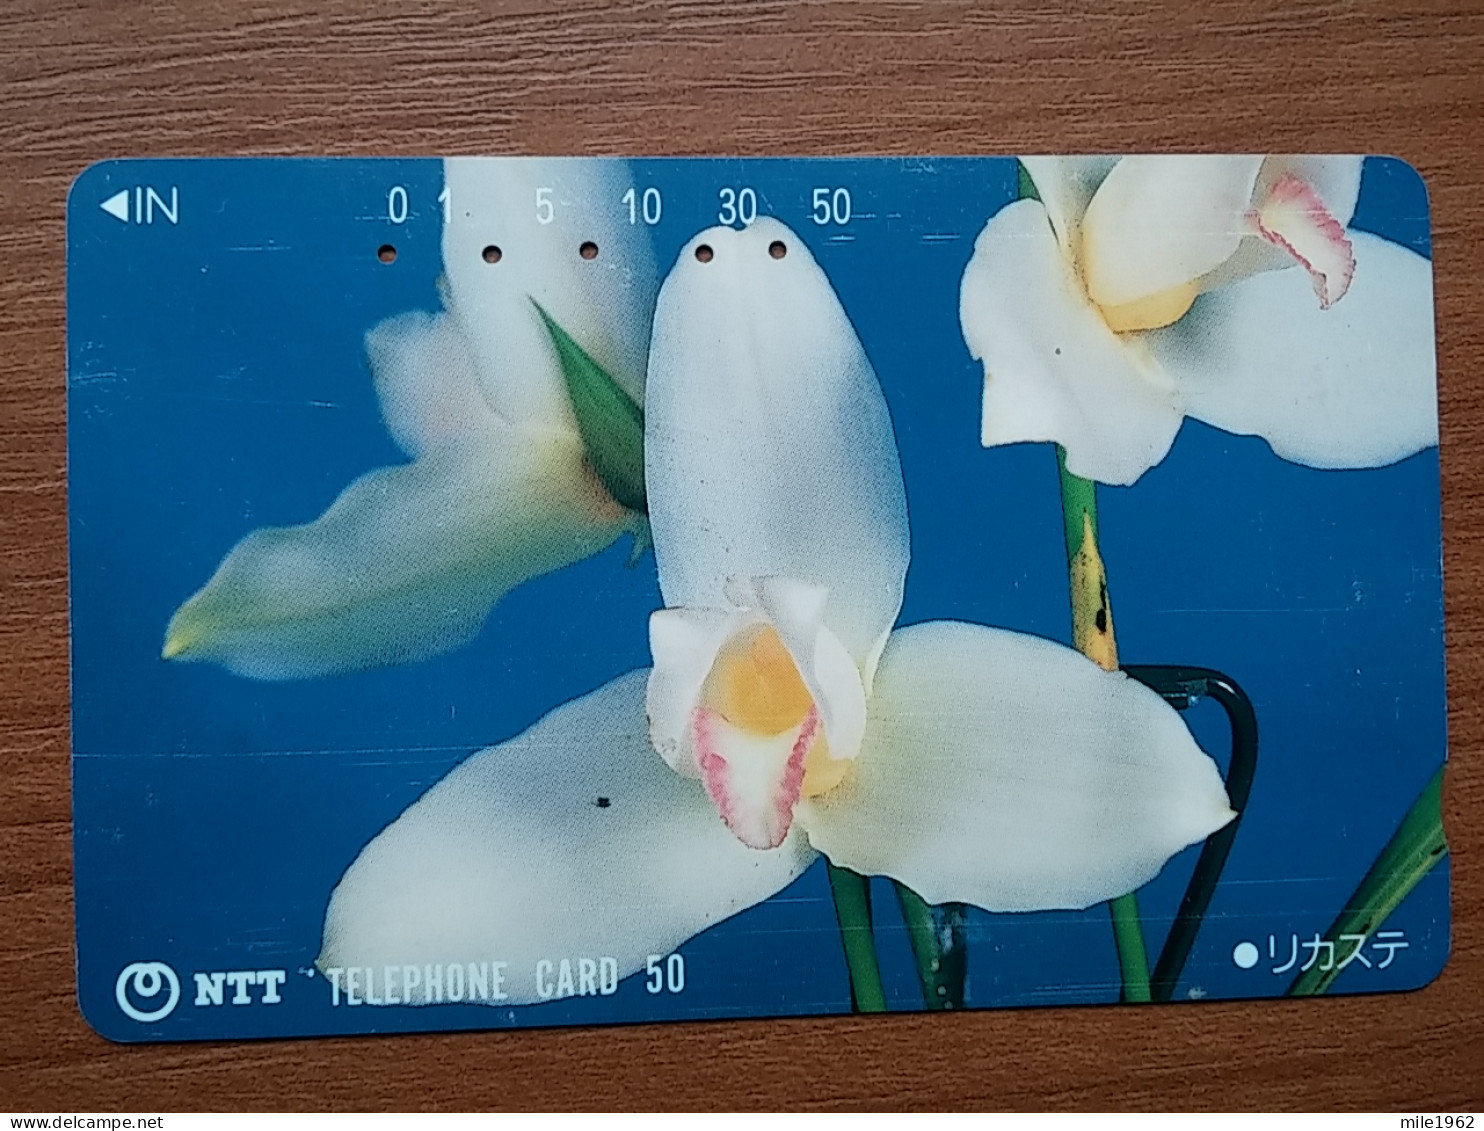 T-383 - JAPAN, Japon, Nipon, TELECARD, PHONECARD, Flower, Fleur, NTT 331-133 - Blumen